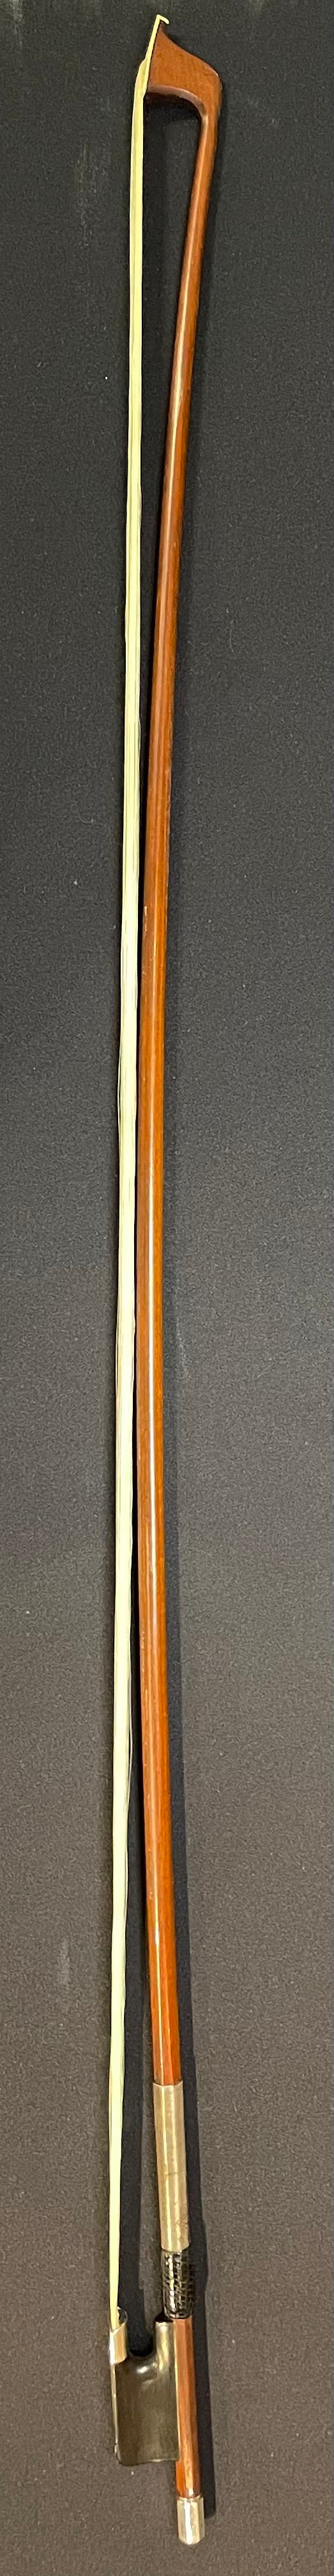 4/4 Violin Bow - Albert Hurnberger Wood Model